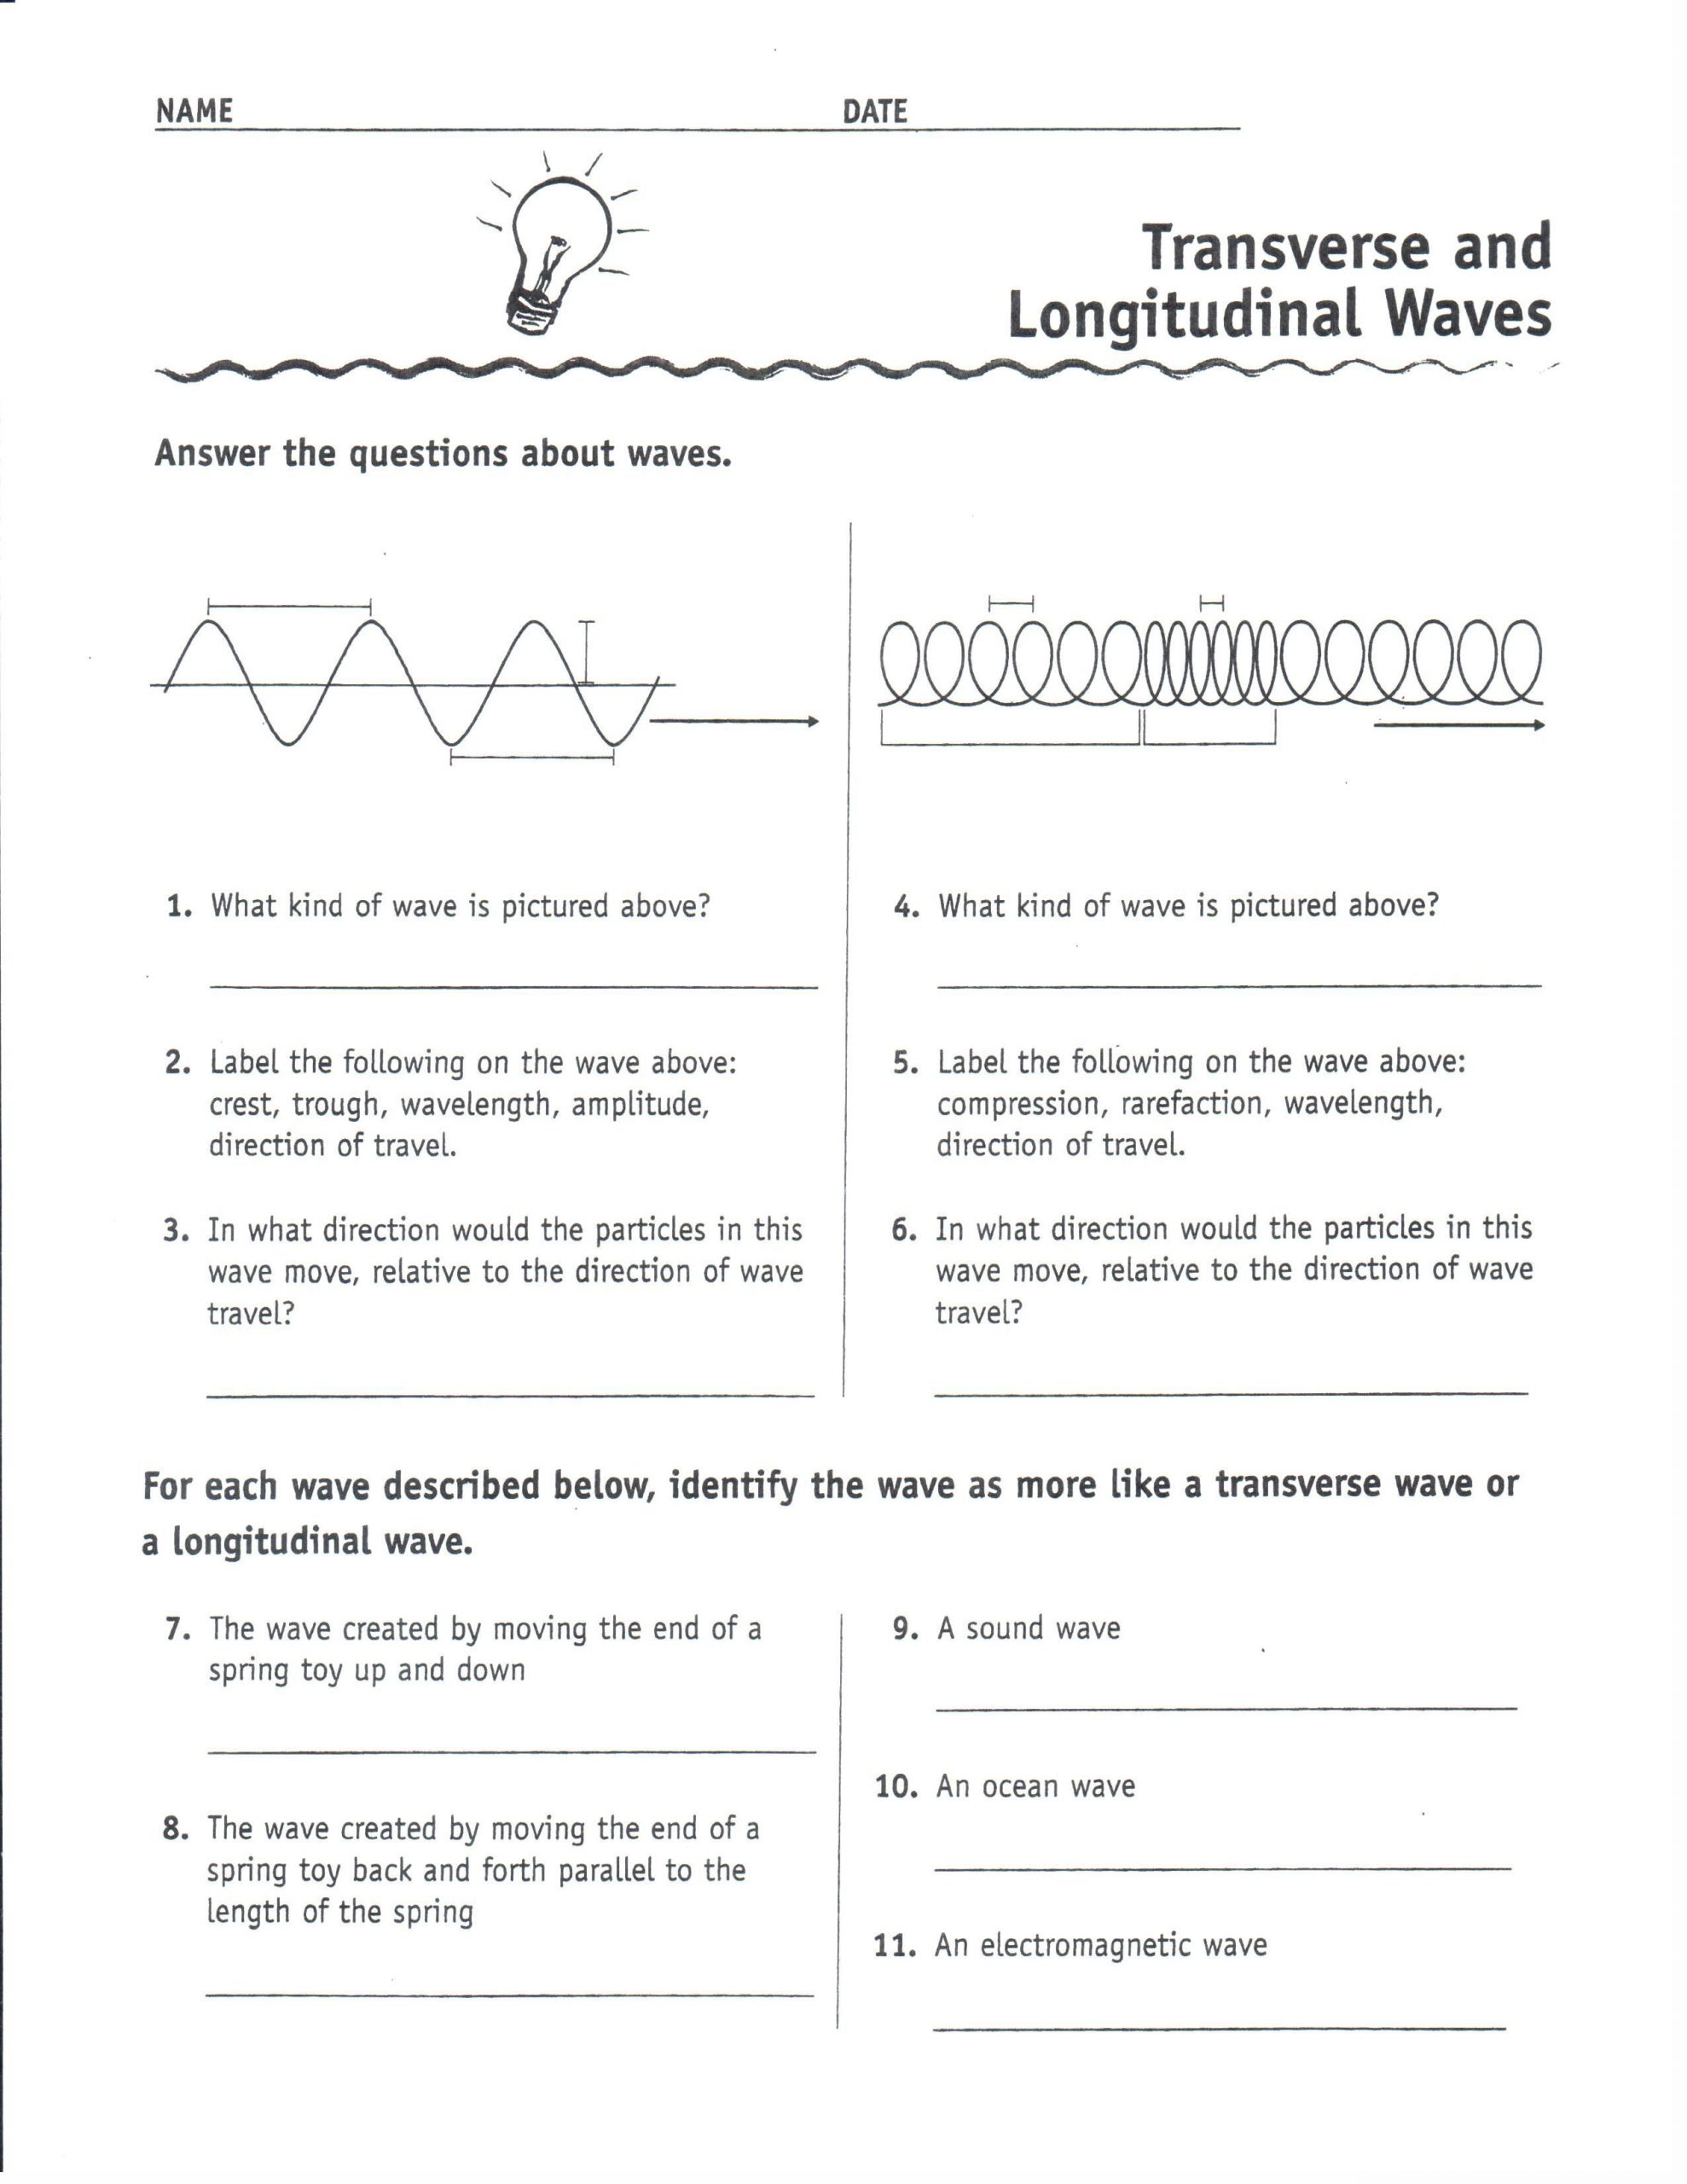 Waves Worksheet Answer Key Physical Science Transverse and Longitudinal Waves 1uyxl0i